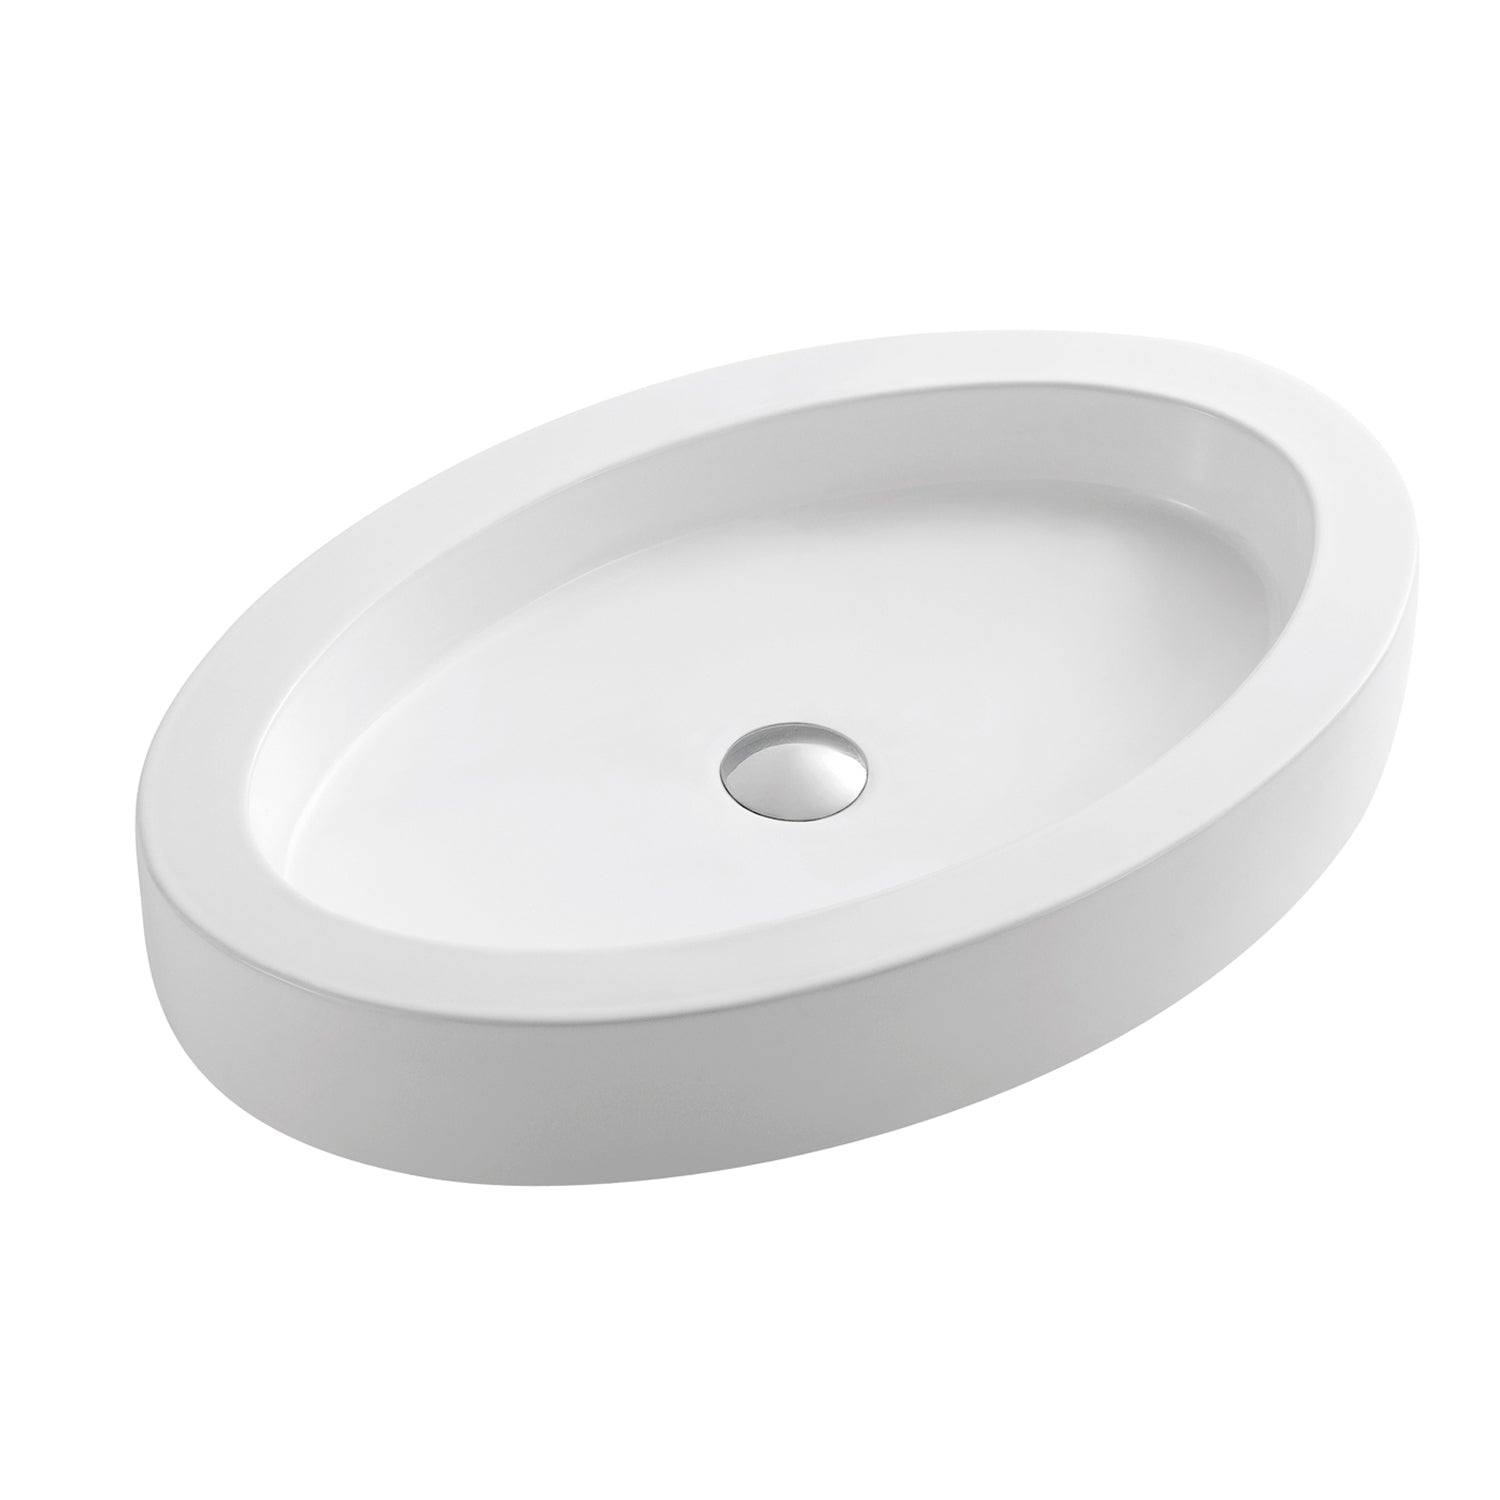 DAX Ceramic Oval Single Bowl Bathroom Vessel Sink, White Finish, 25 x 3-15/16 x 16-5/16 Inches (BSN-CL1219)